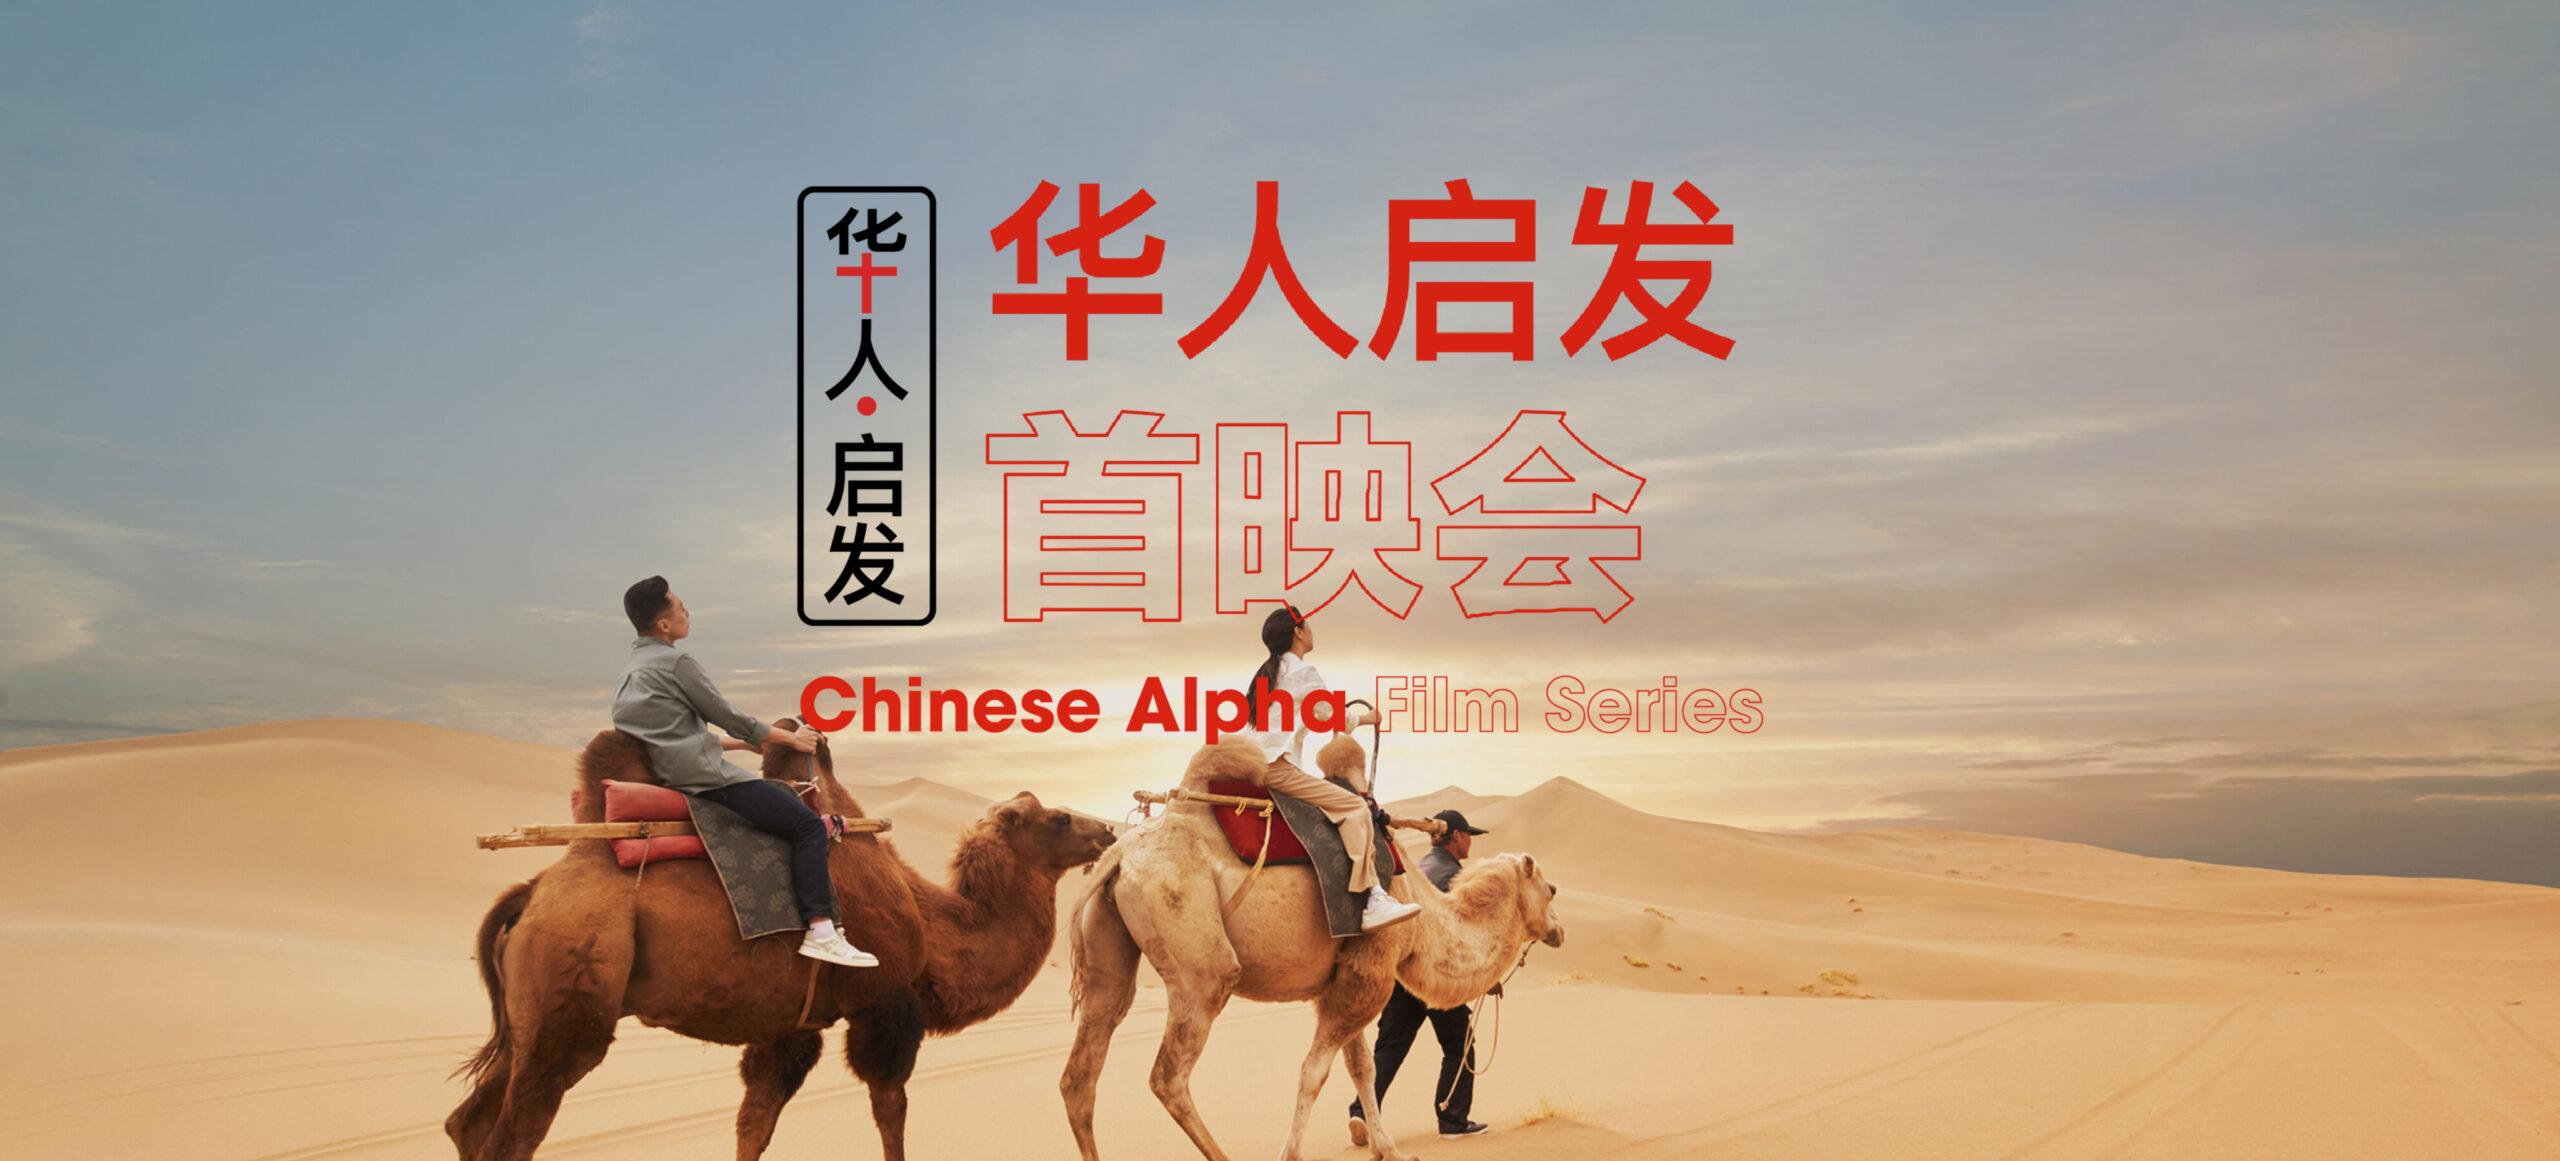 Chinese Alpha Film Series